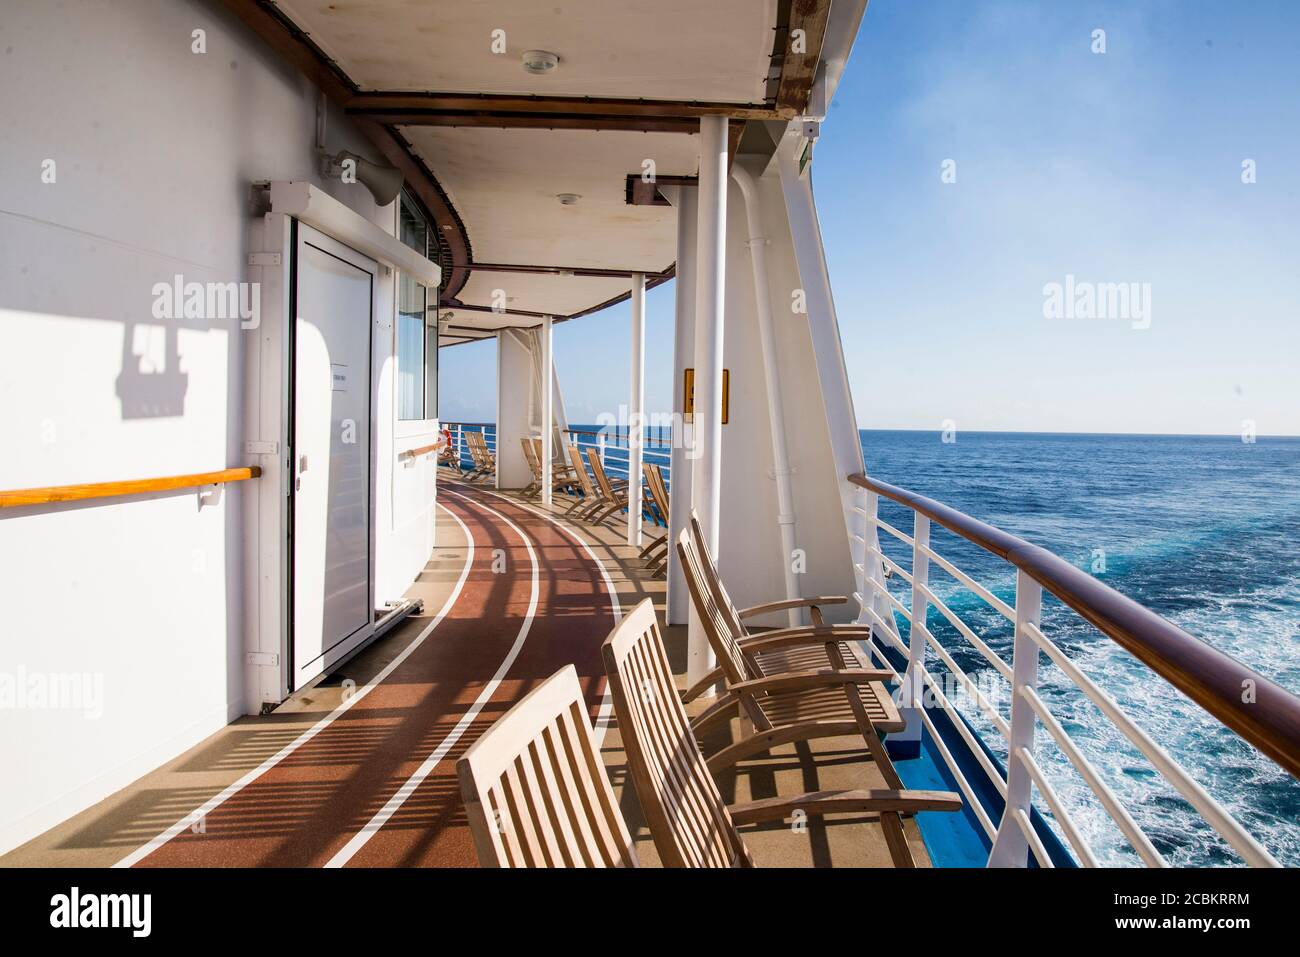 Deck of Cruise ship at sea, Falmouth, Jamaica Stock Photo